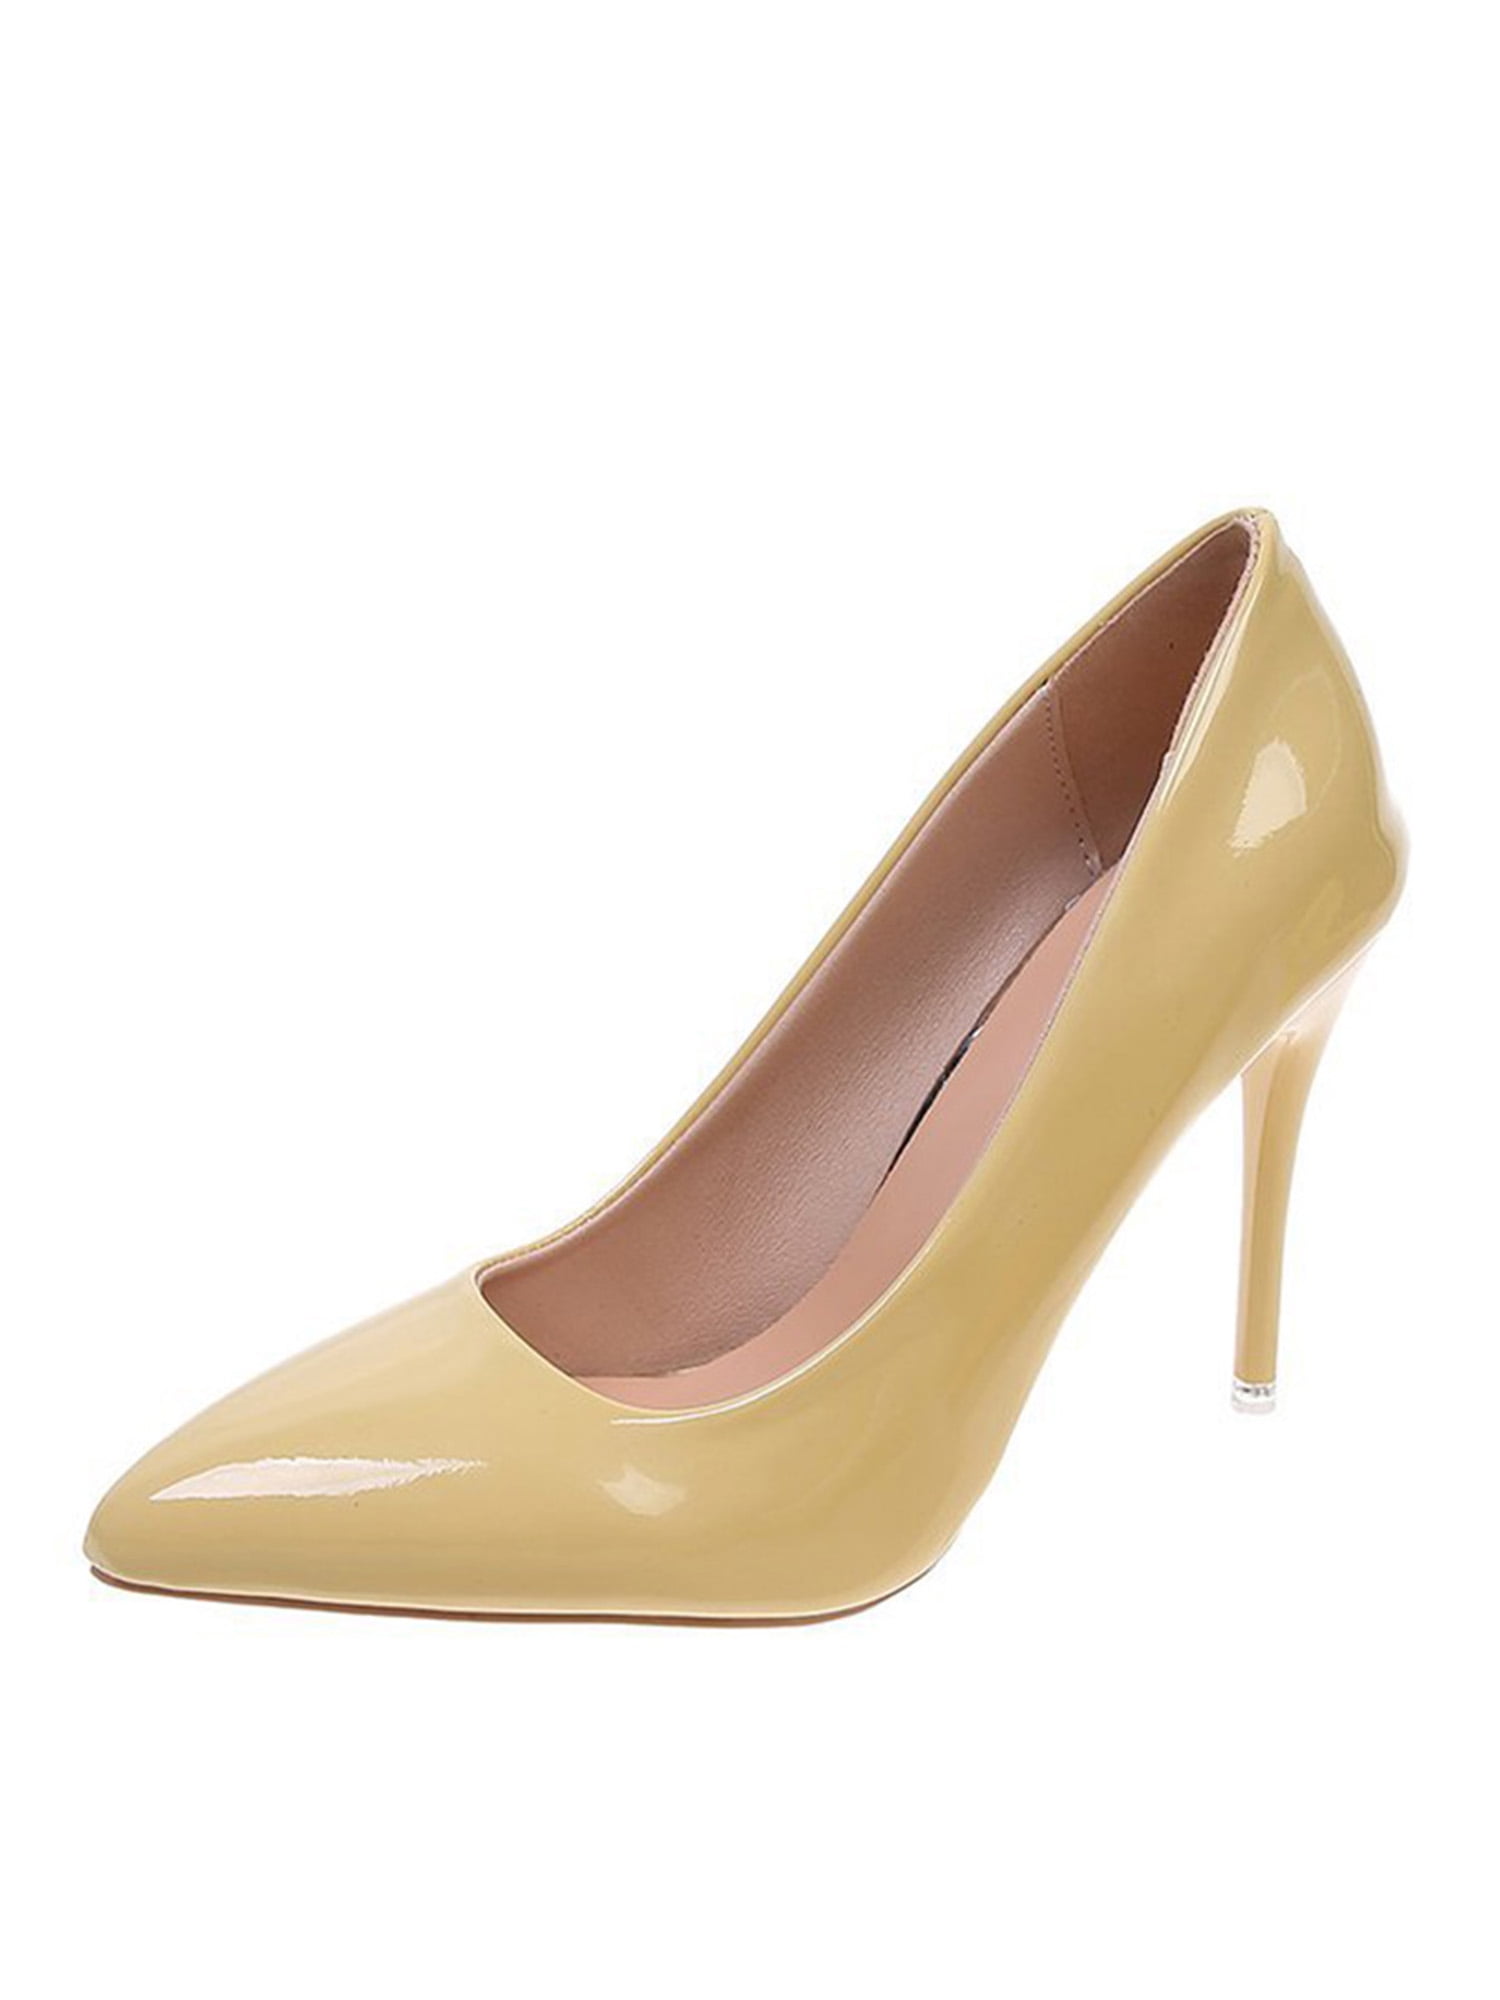 Women's Yellow Pointed Toe Stiletto Pumps High Heels | eBay